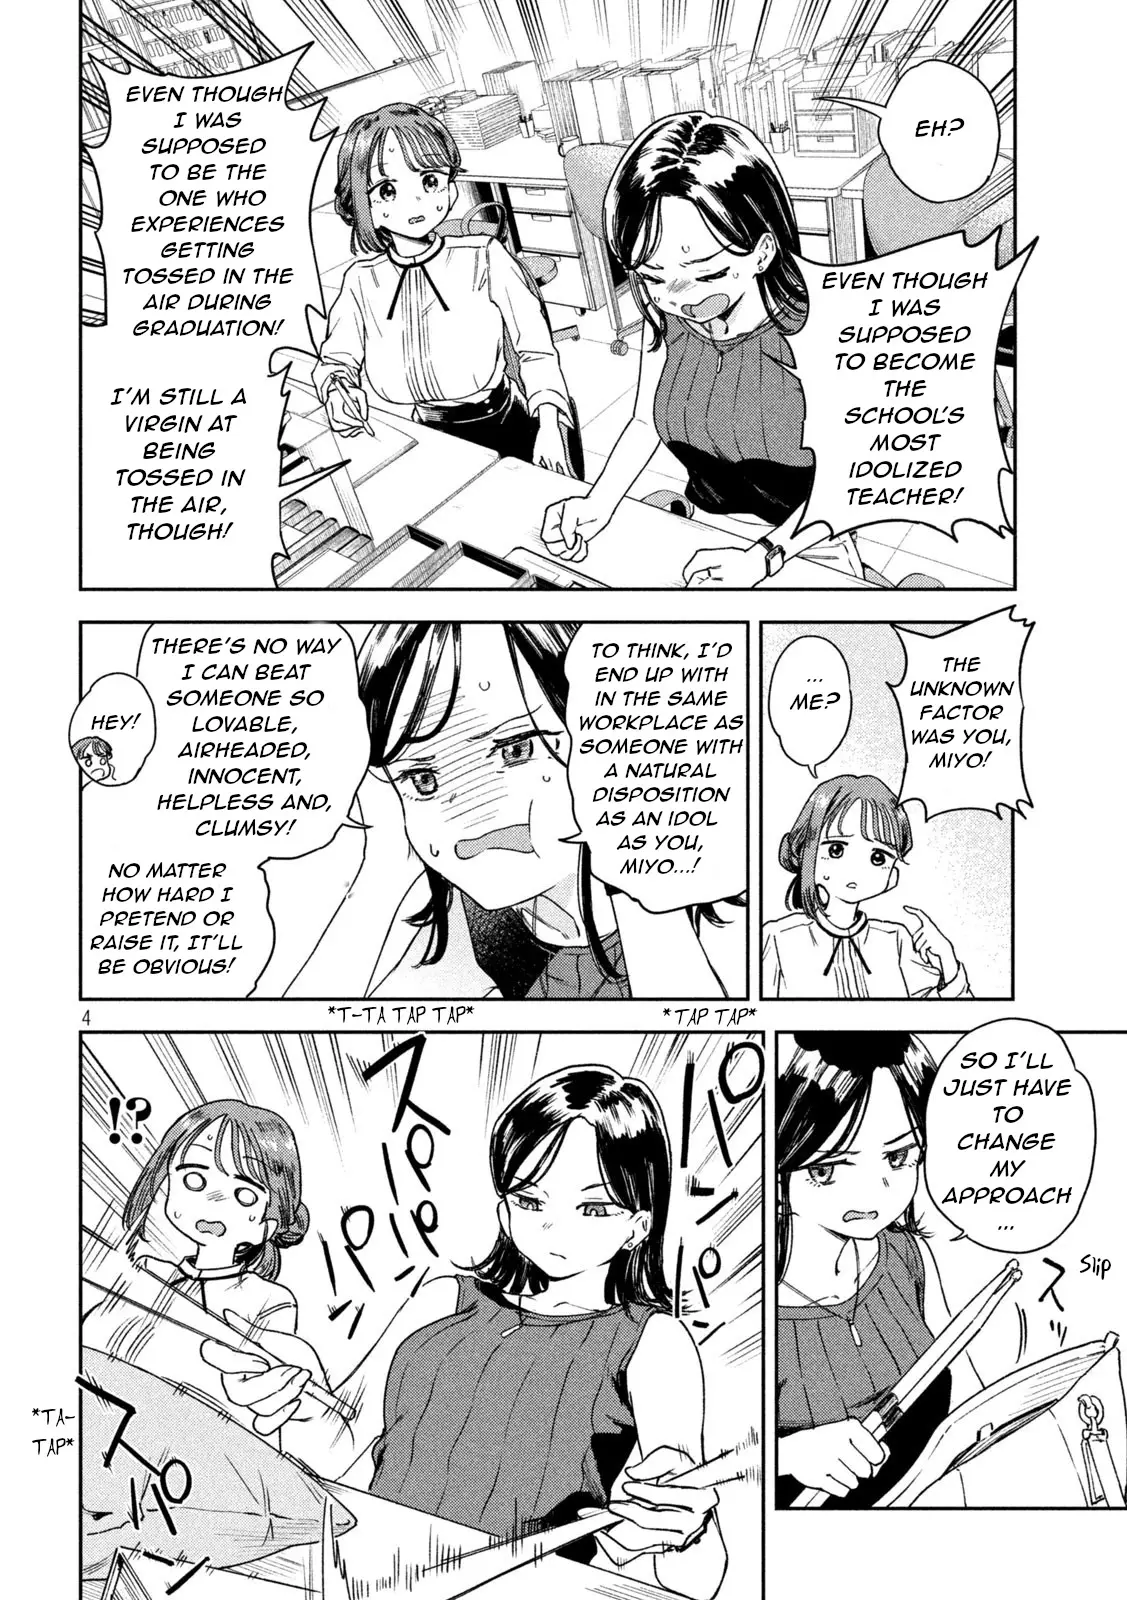 Miyo-Chan Sensei Said So - 4 page 4-0f600af0